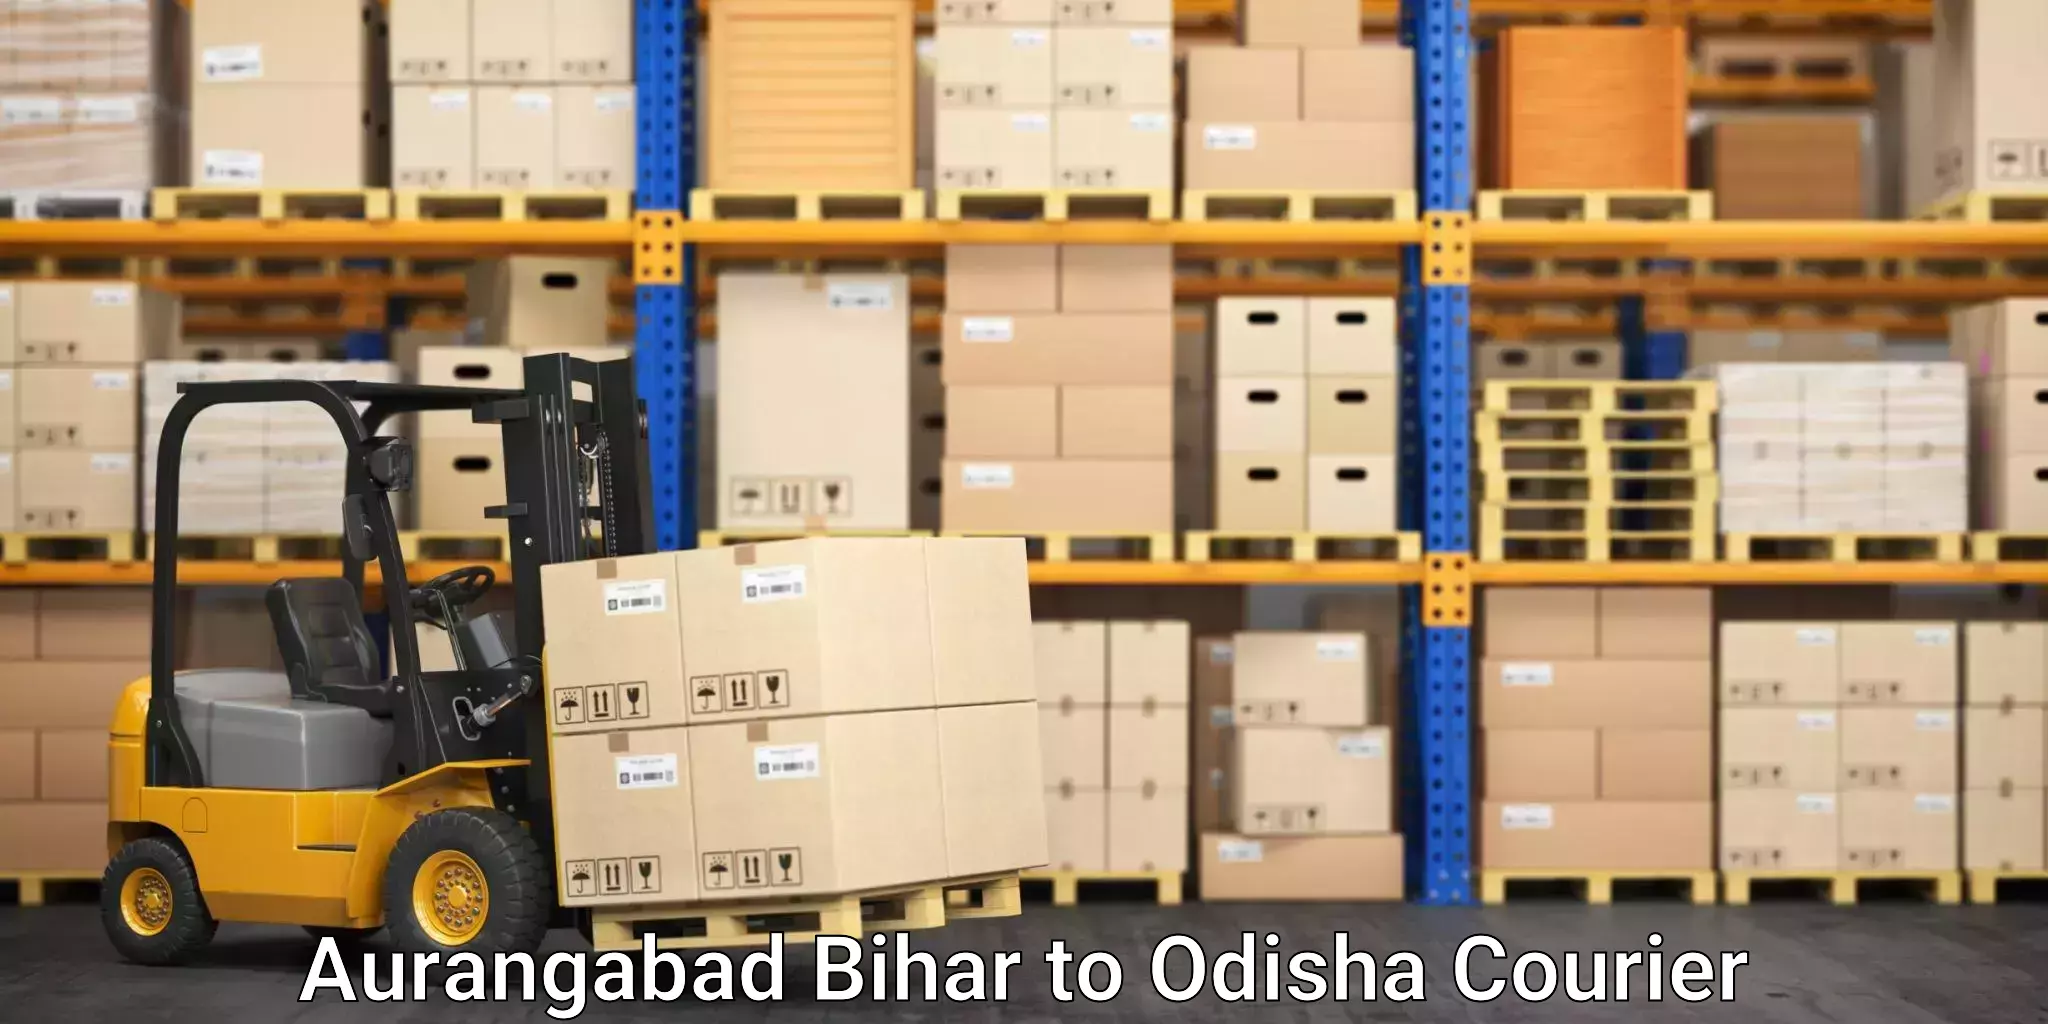 Reliable movers Aurangabad Bihar to Agarpada